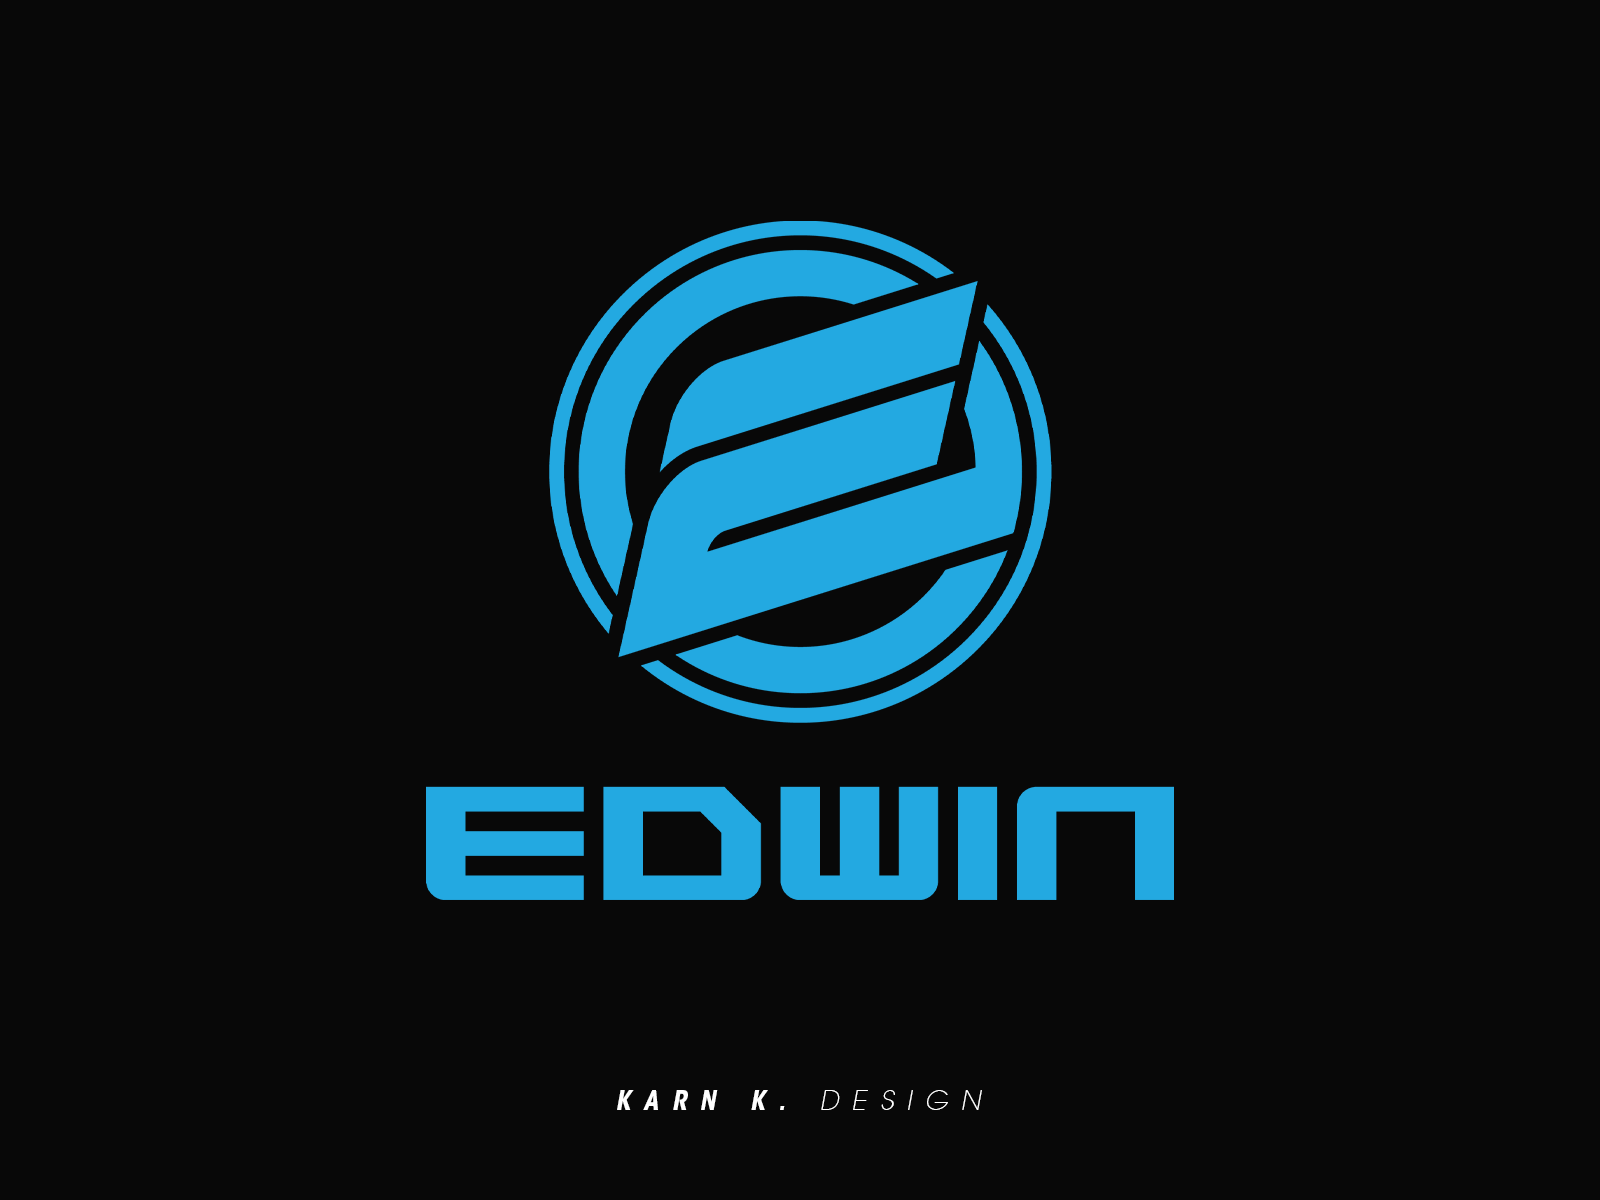 edwin brand